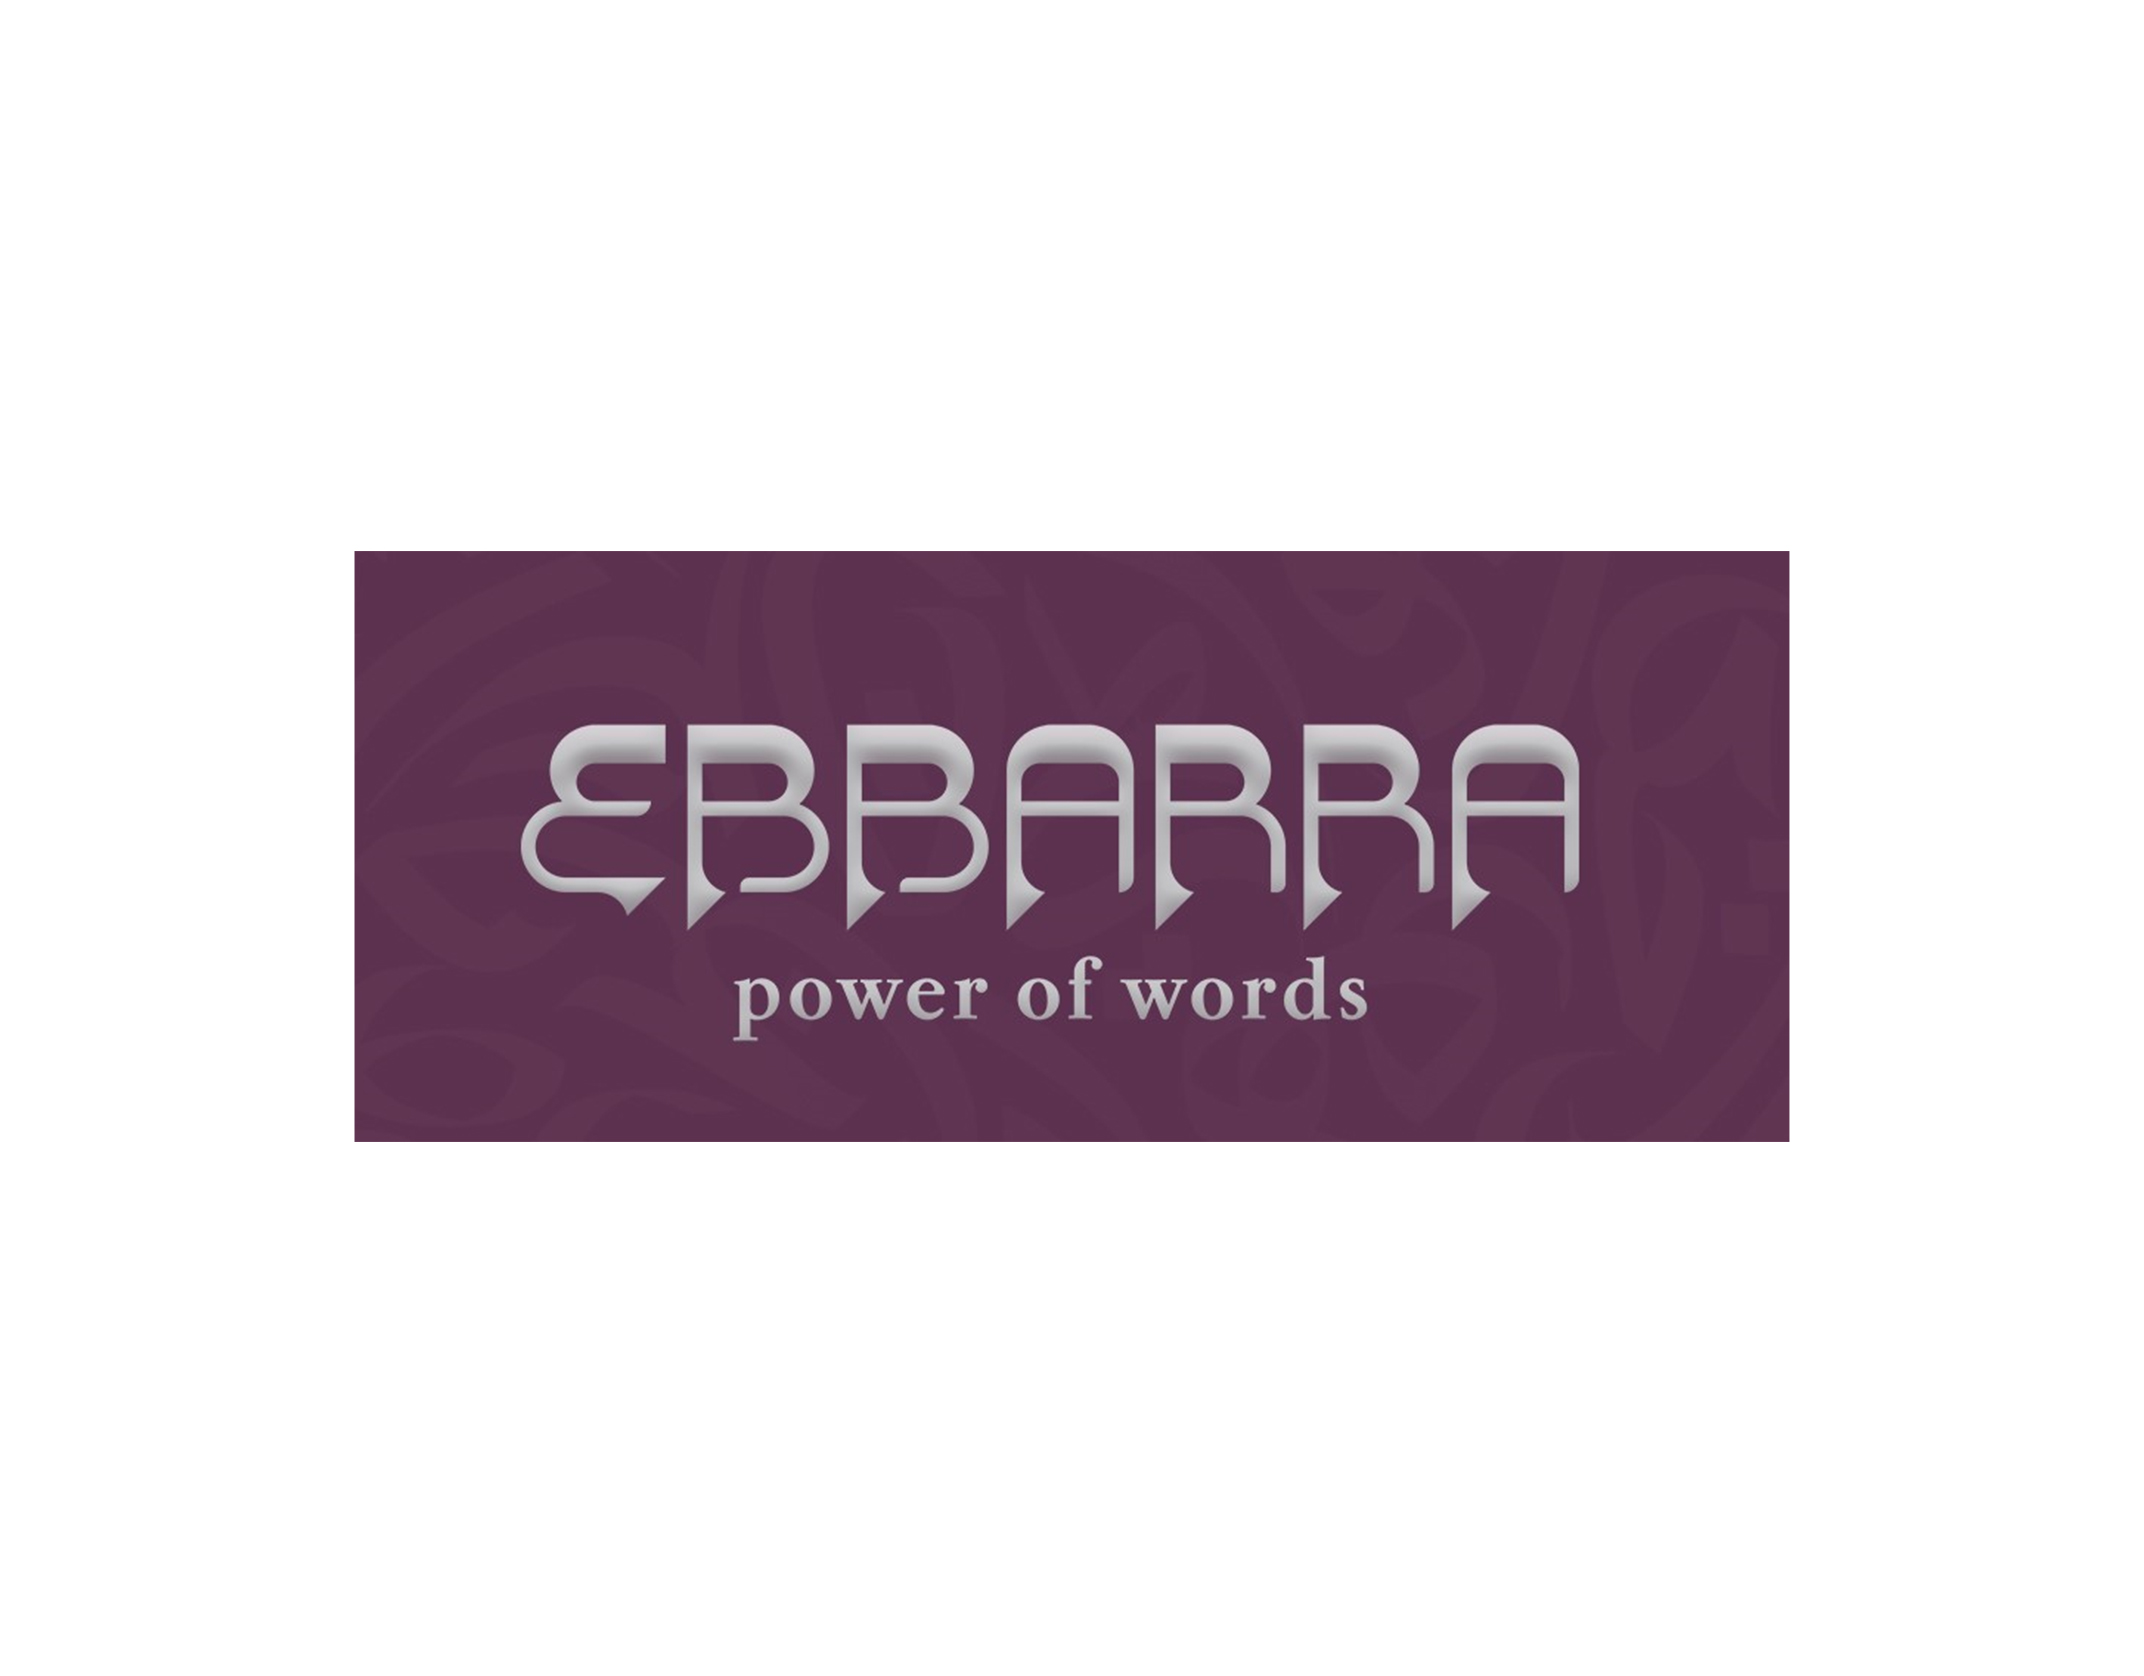 Ebbarra